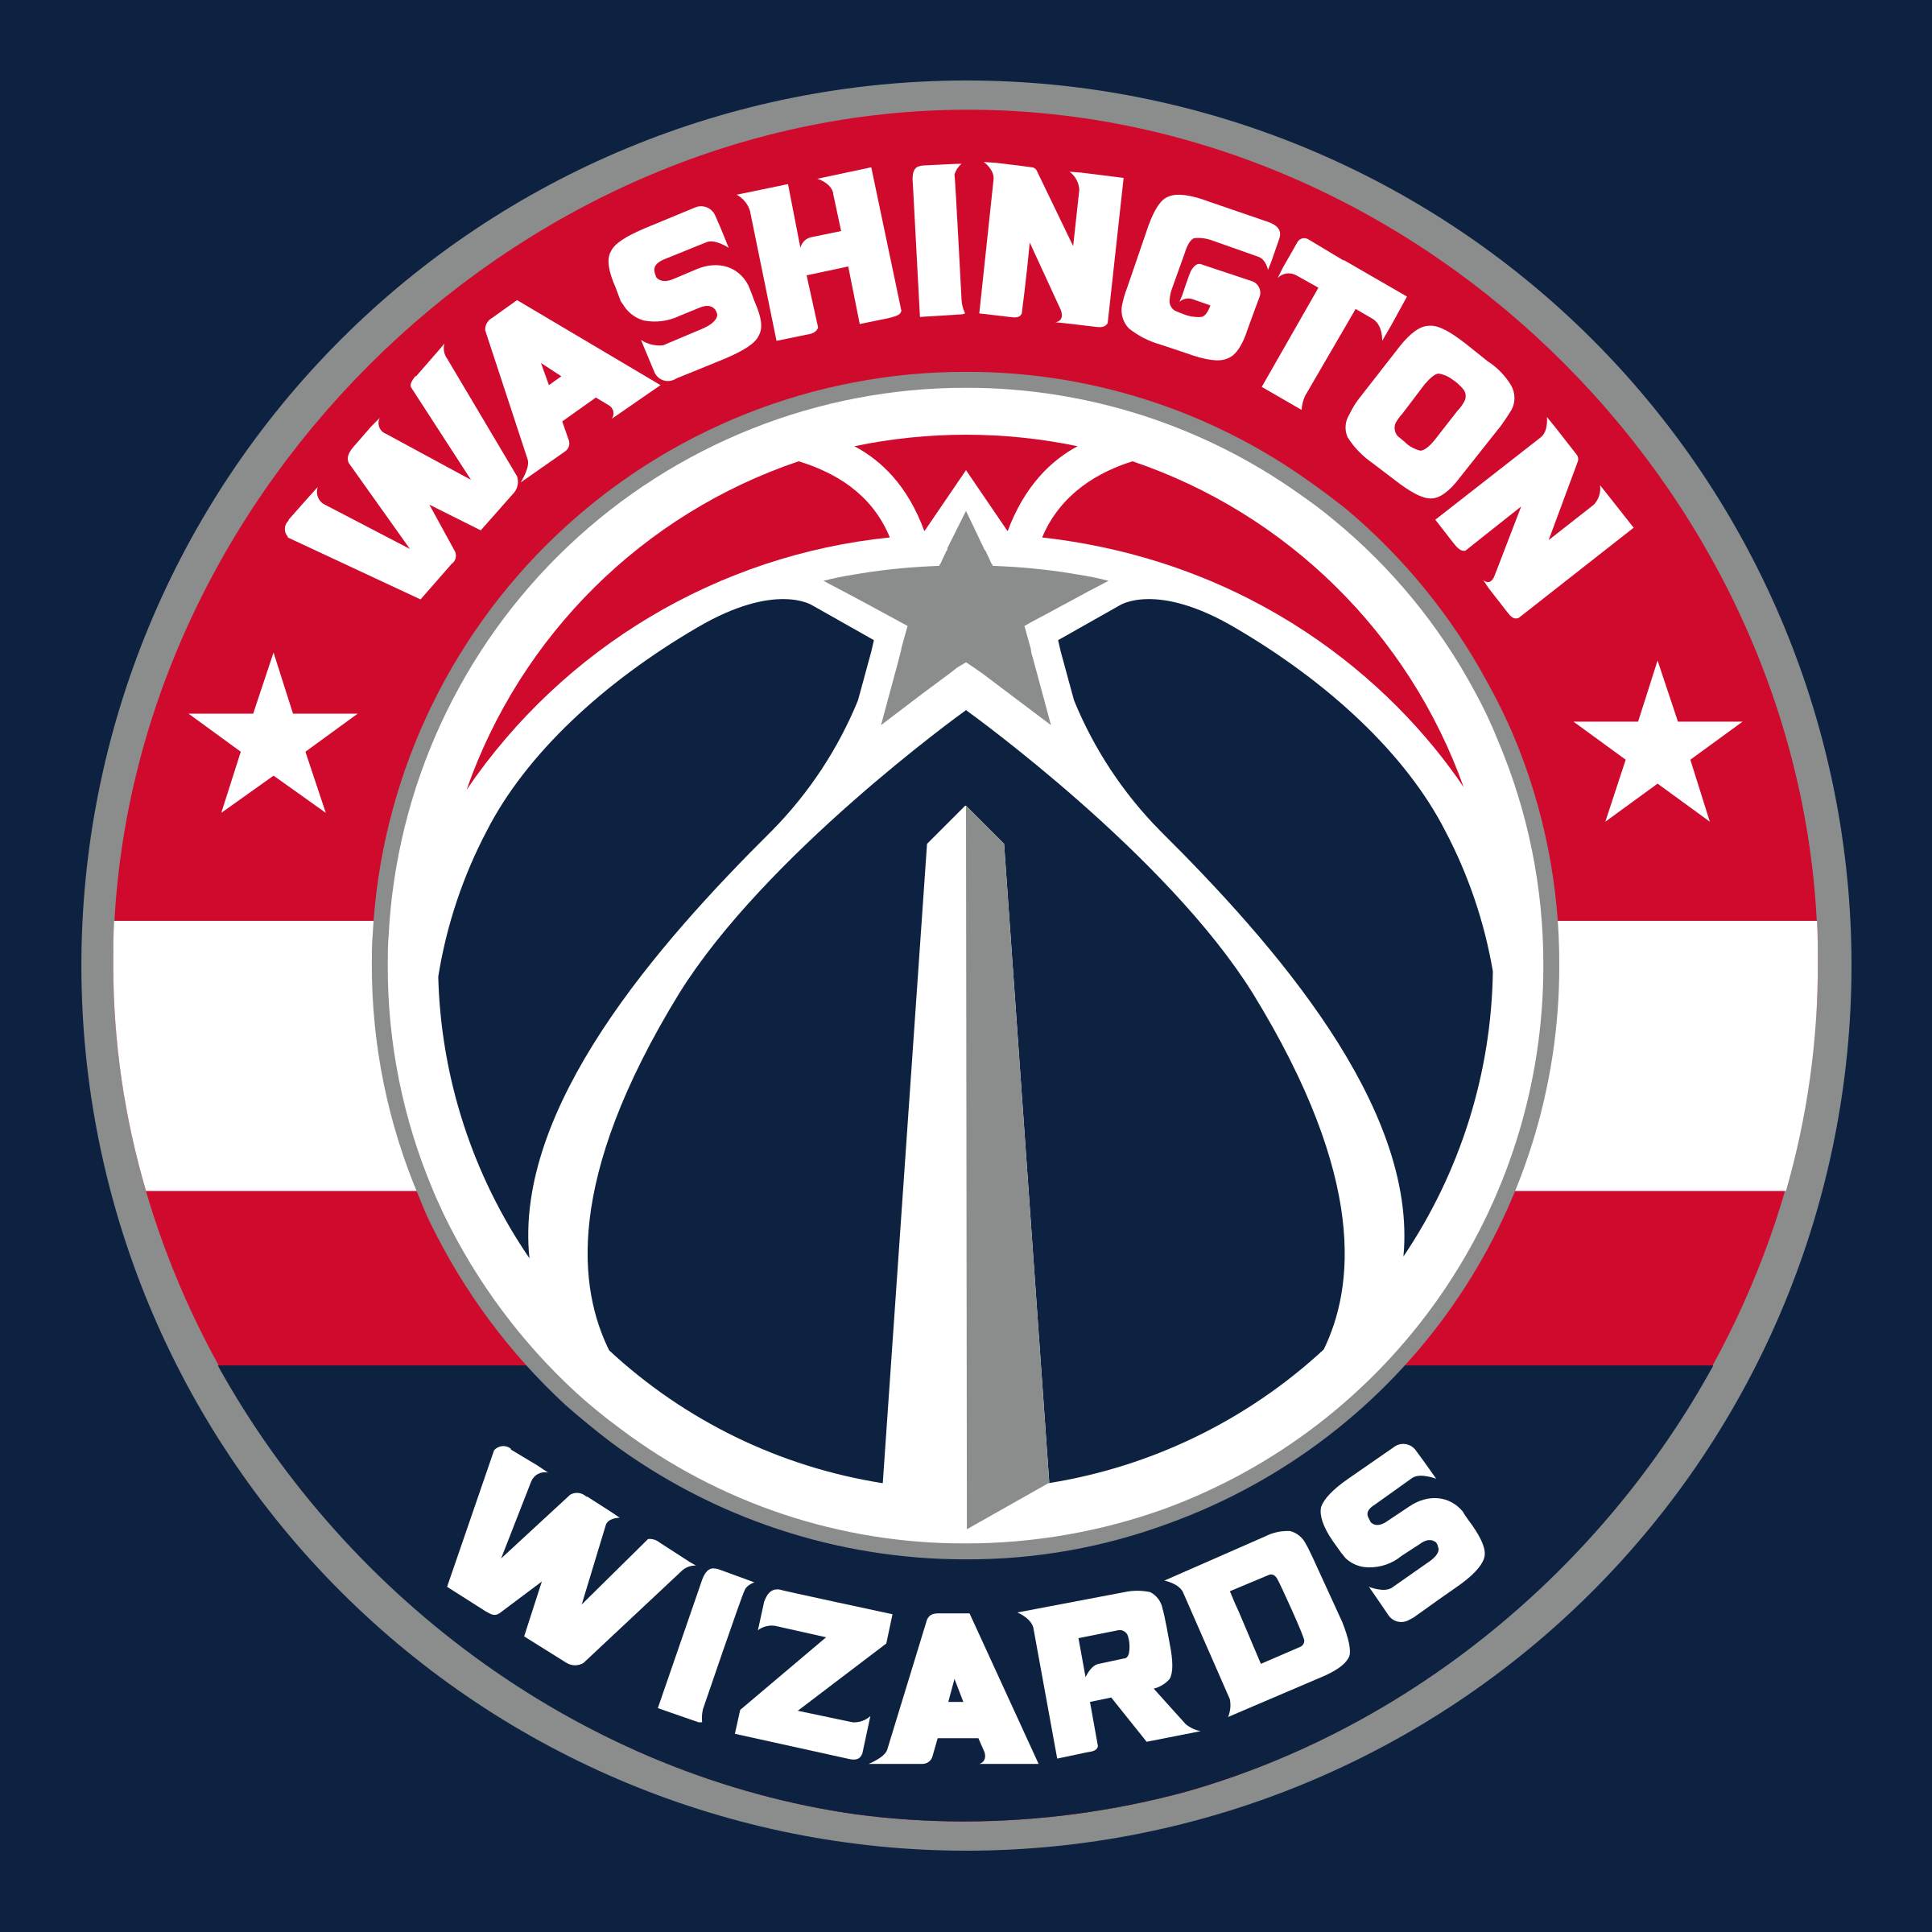 Wizards Logo - Washington Wizards Logo PNG Transparent & SVG Vector - Freebie Supply